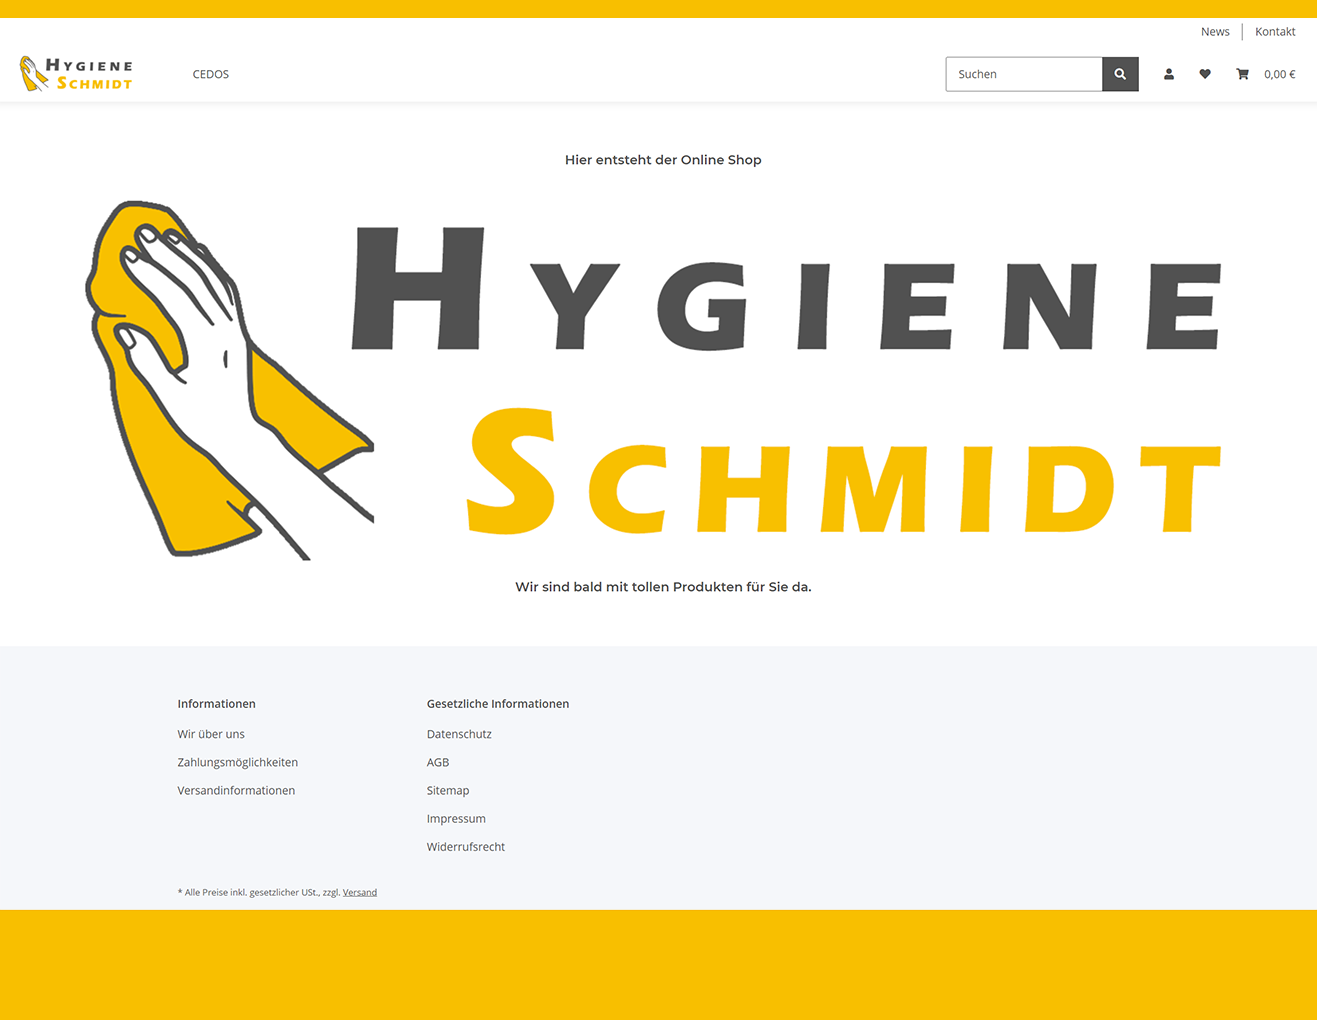 Hygiene Schmidt Online Shop